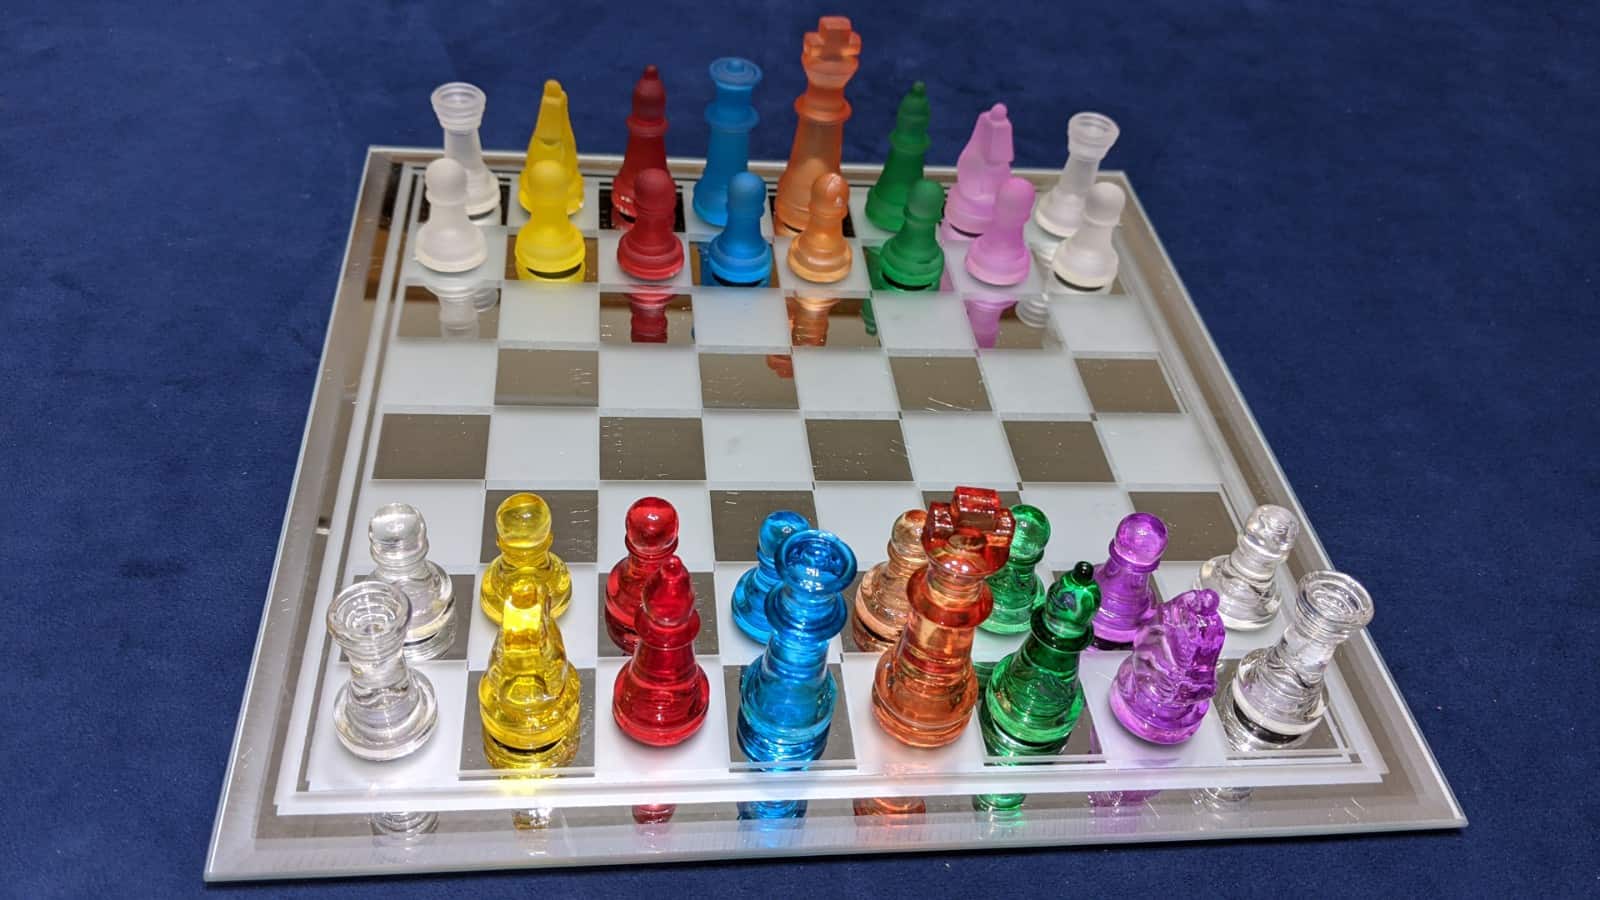 glass chess set